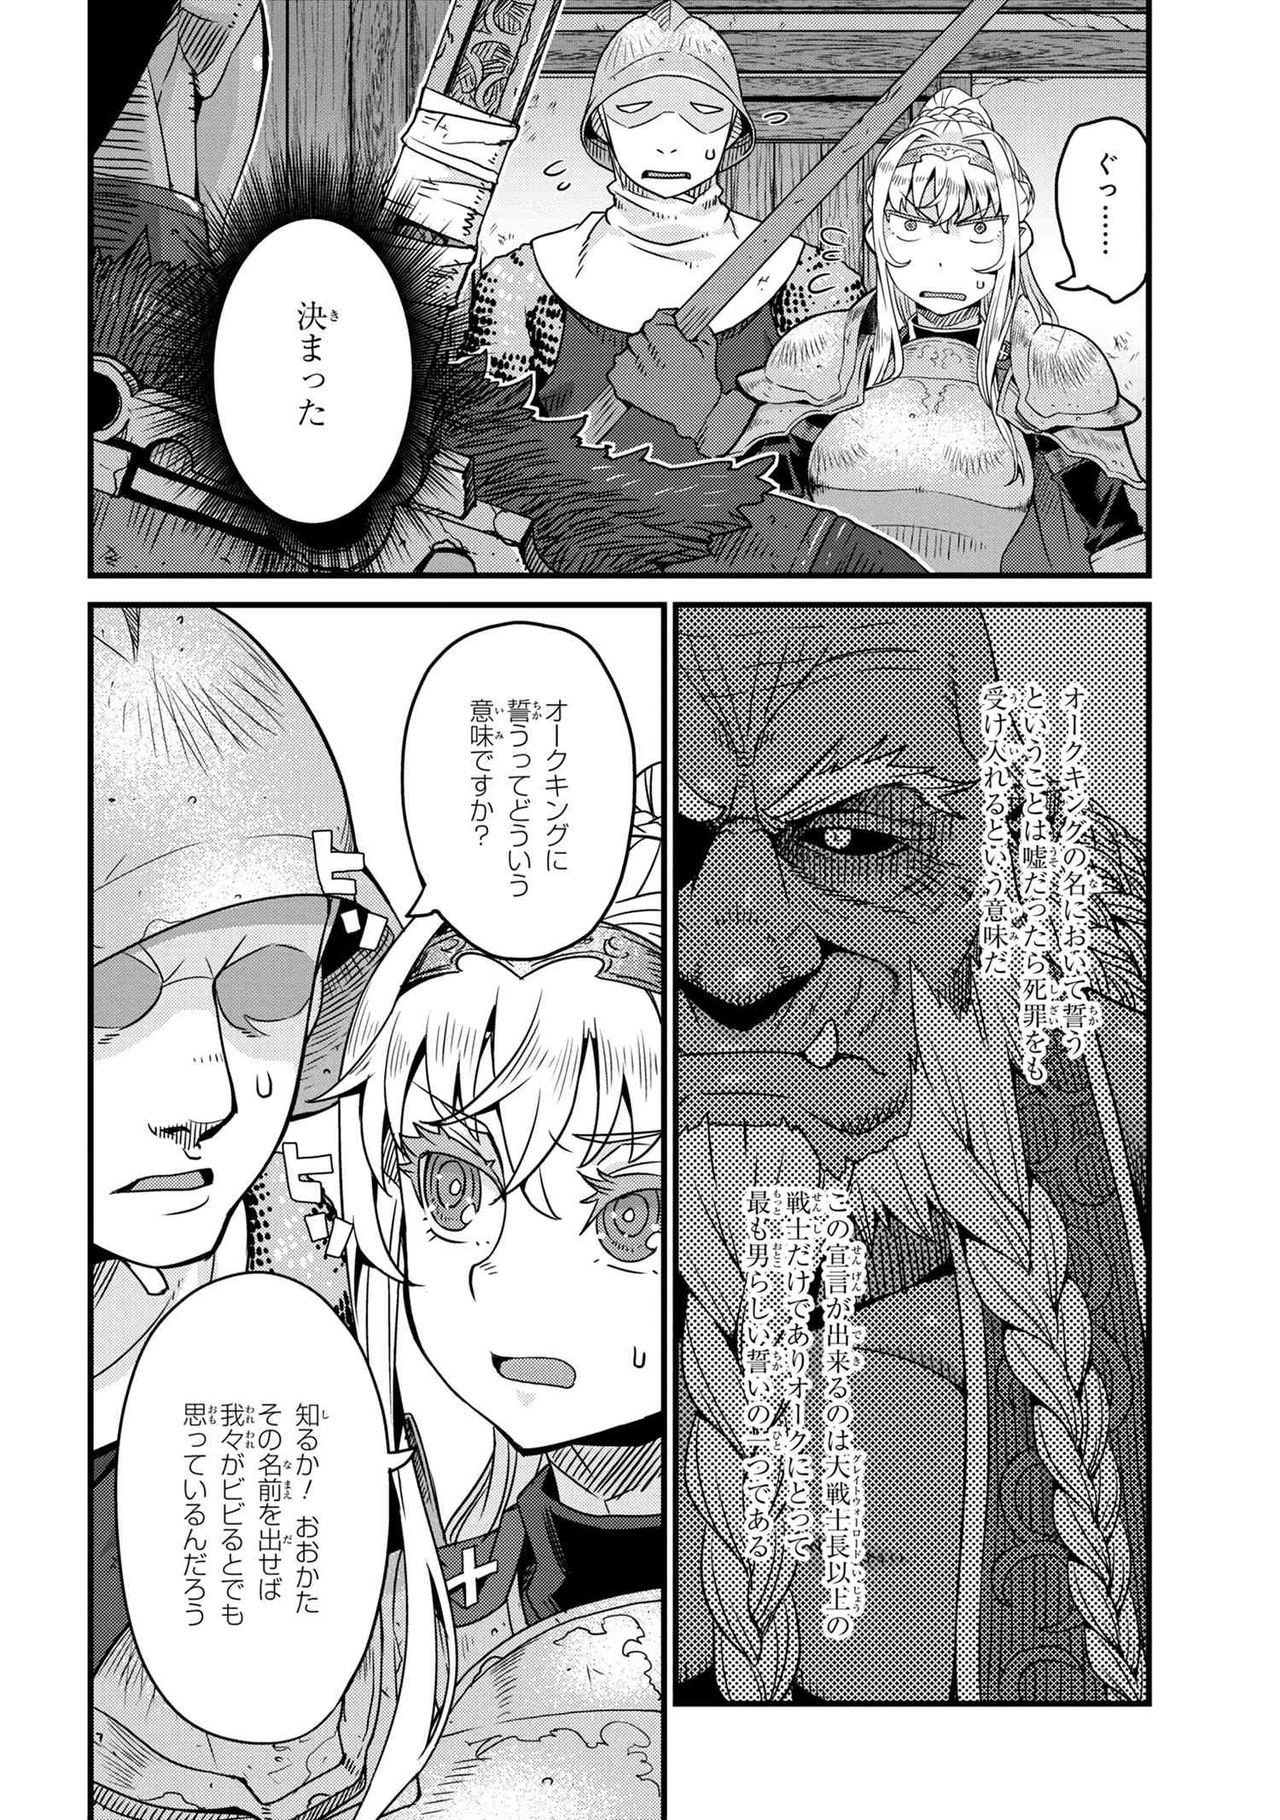 [Tsubakuro_U] Orc Hero Story - Discovery Chronicles Ch.2-1 (COMIC YAUP 2021-03-25) 5